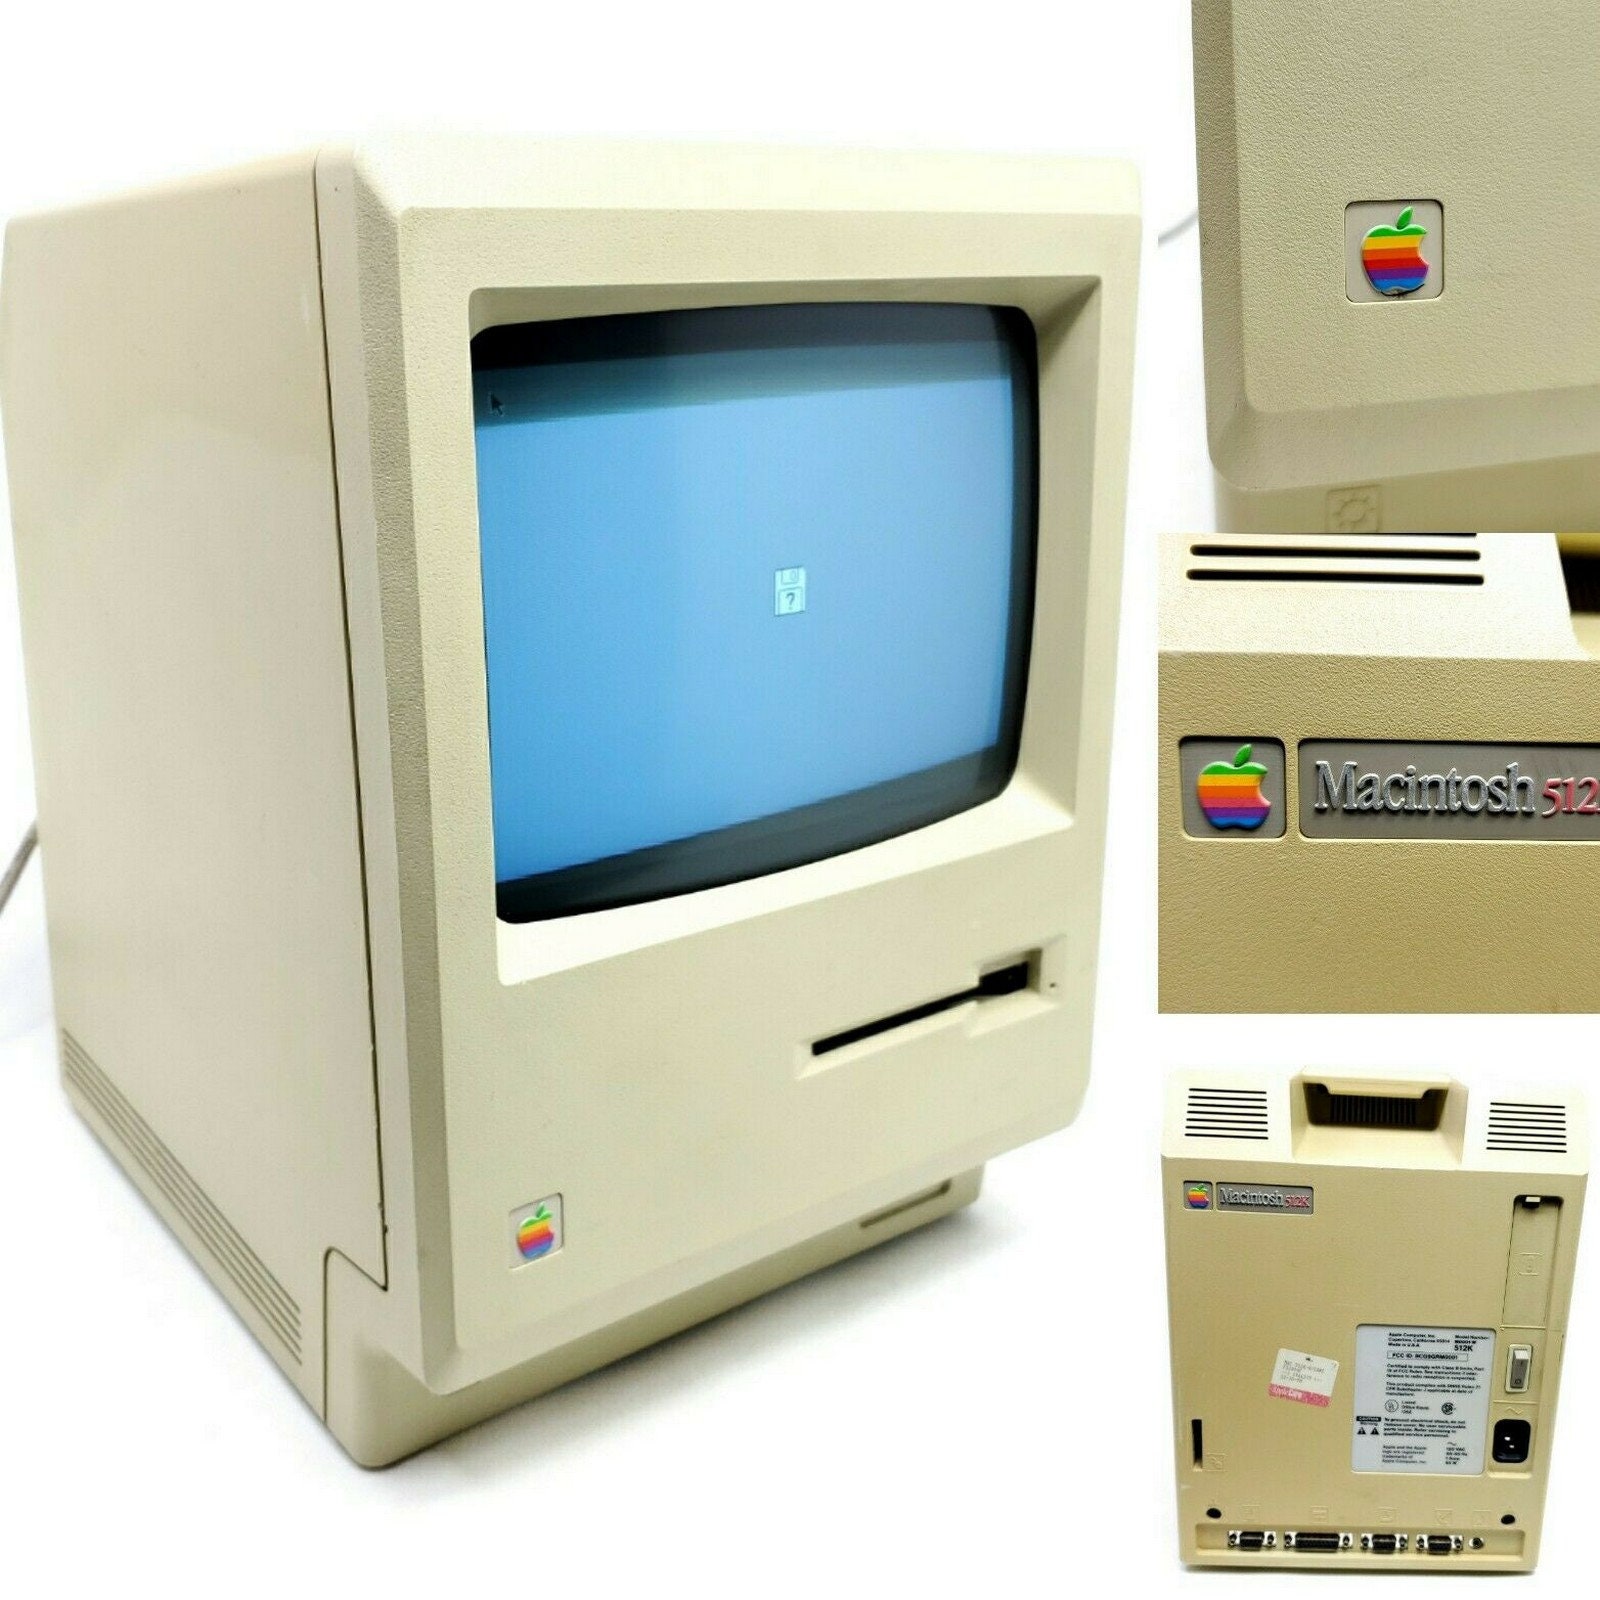 Apple Macintosh 1984 for sale from eBay, Craigslist, Letgo, OfferUp, Amazon,..